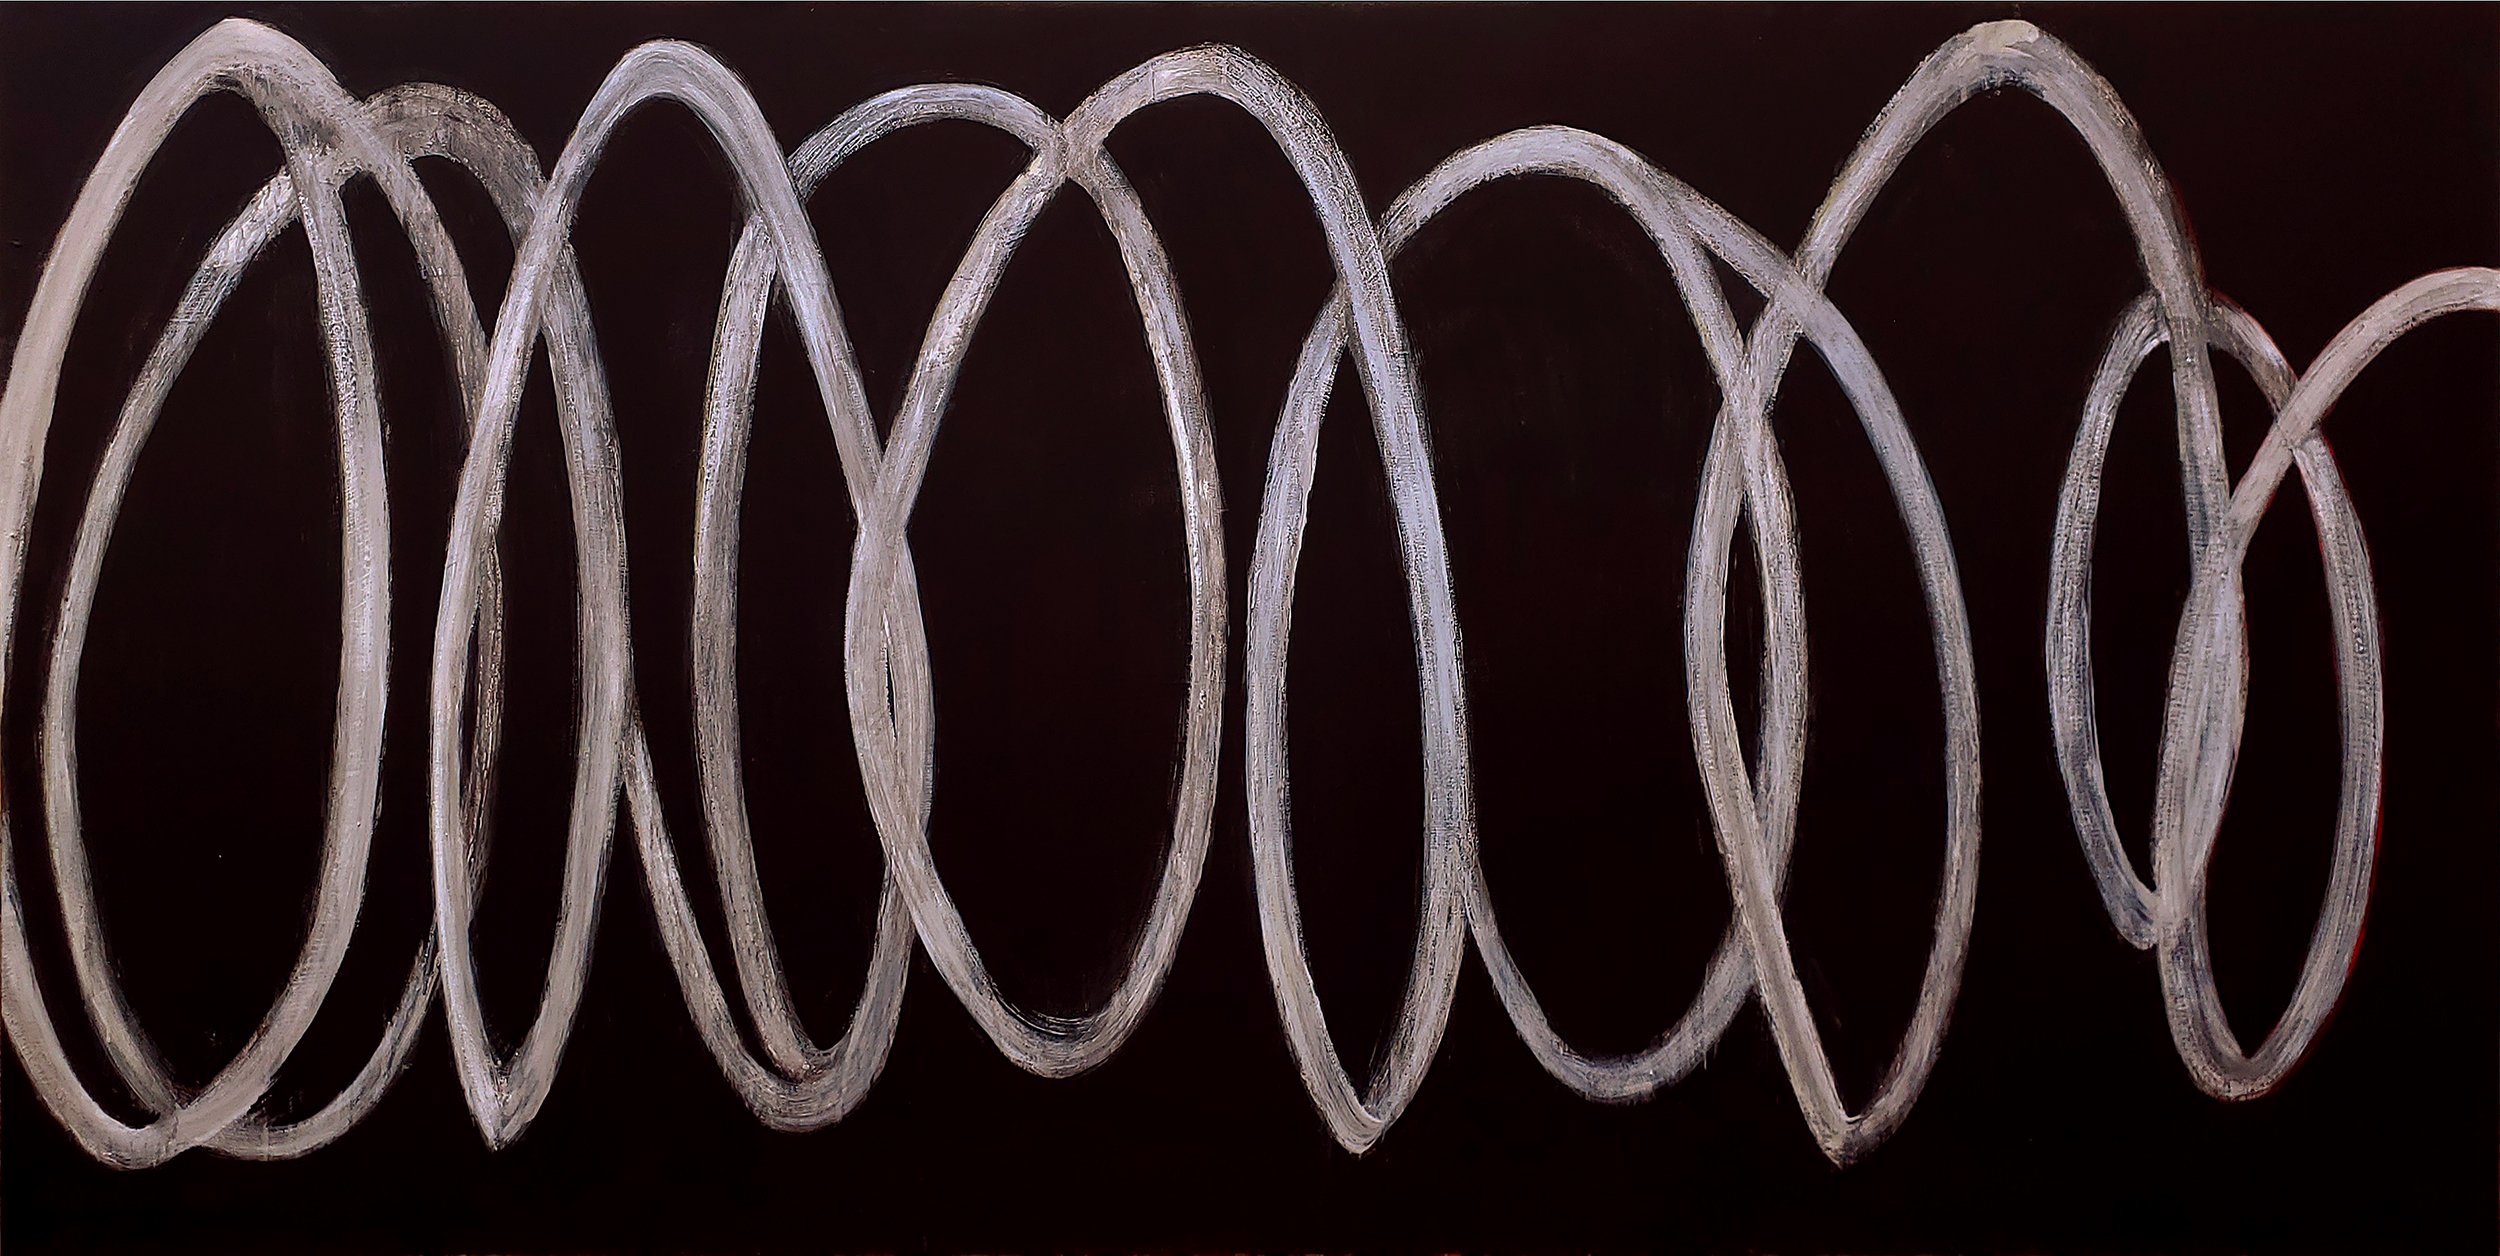 Chalk Series, 4' X 8', acrylic on canvas, 2022